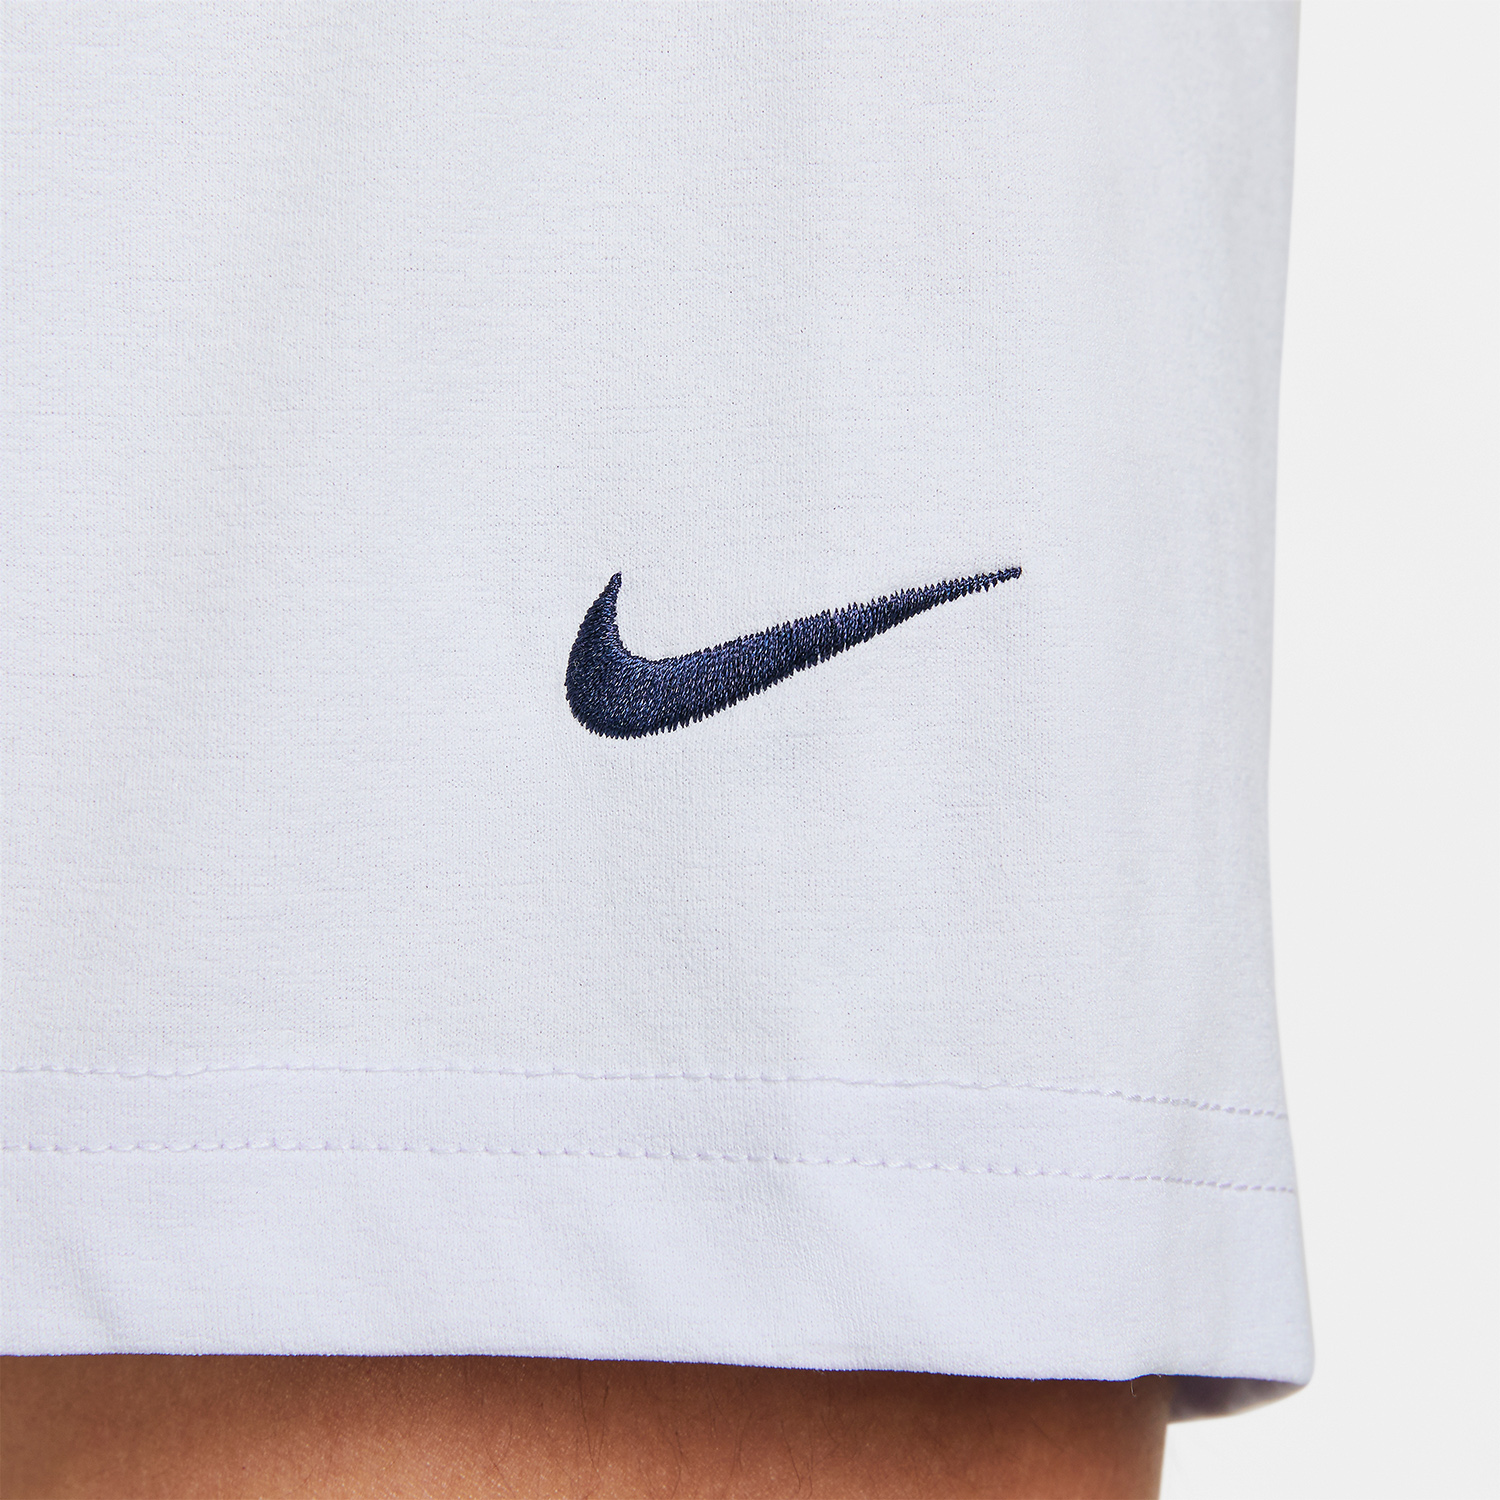 Nike Dri-FIT Hyverse Track Club Camiseta - Footbal Grey/Midnight Navy